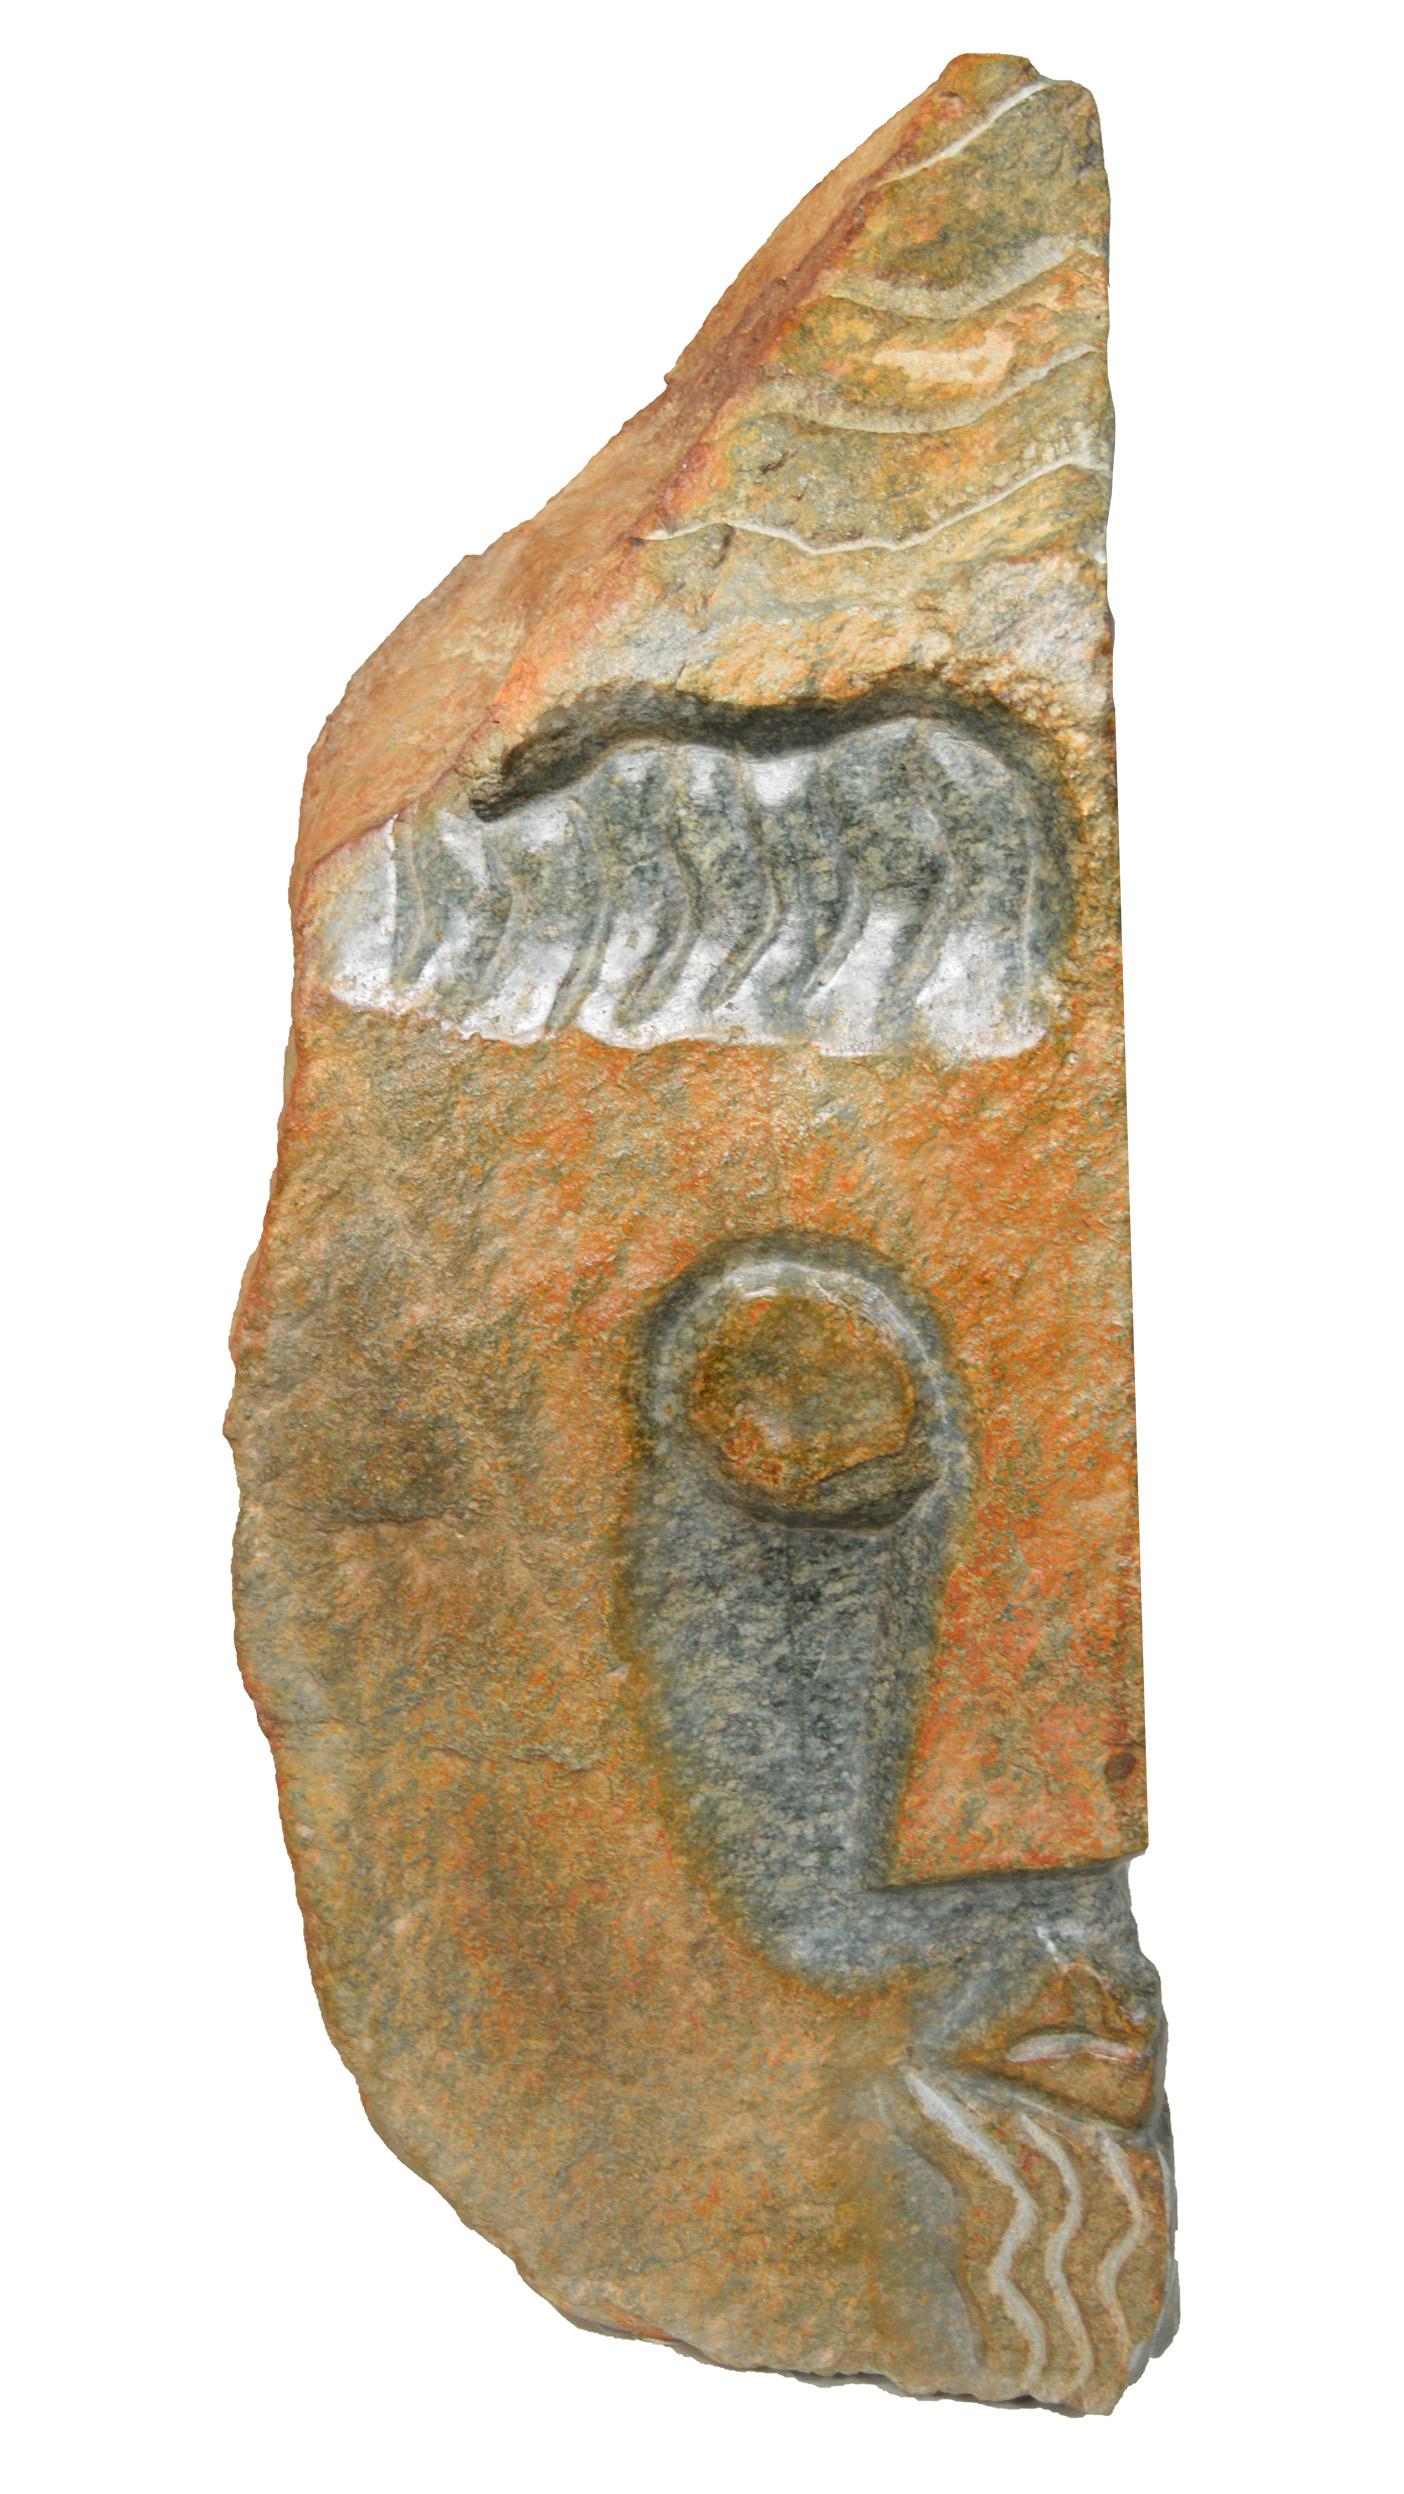 'Notorious Leader' original stone sculpture by Shona artist Nigel James For Sale 2